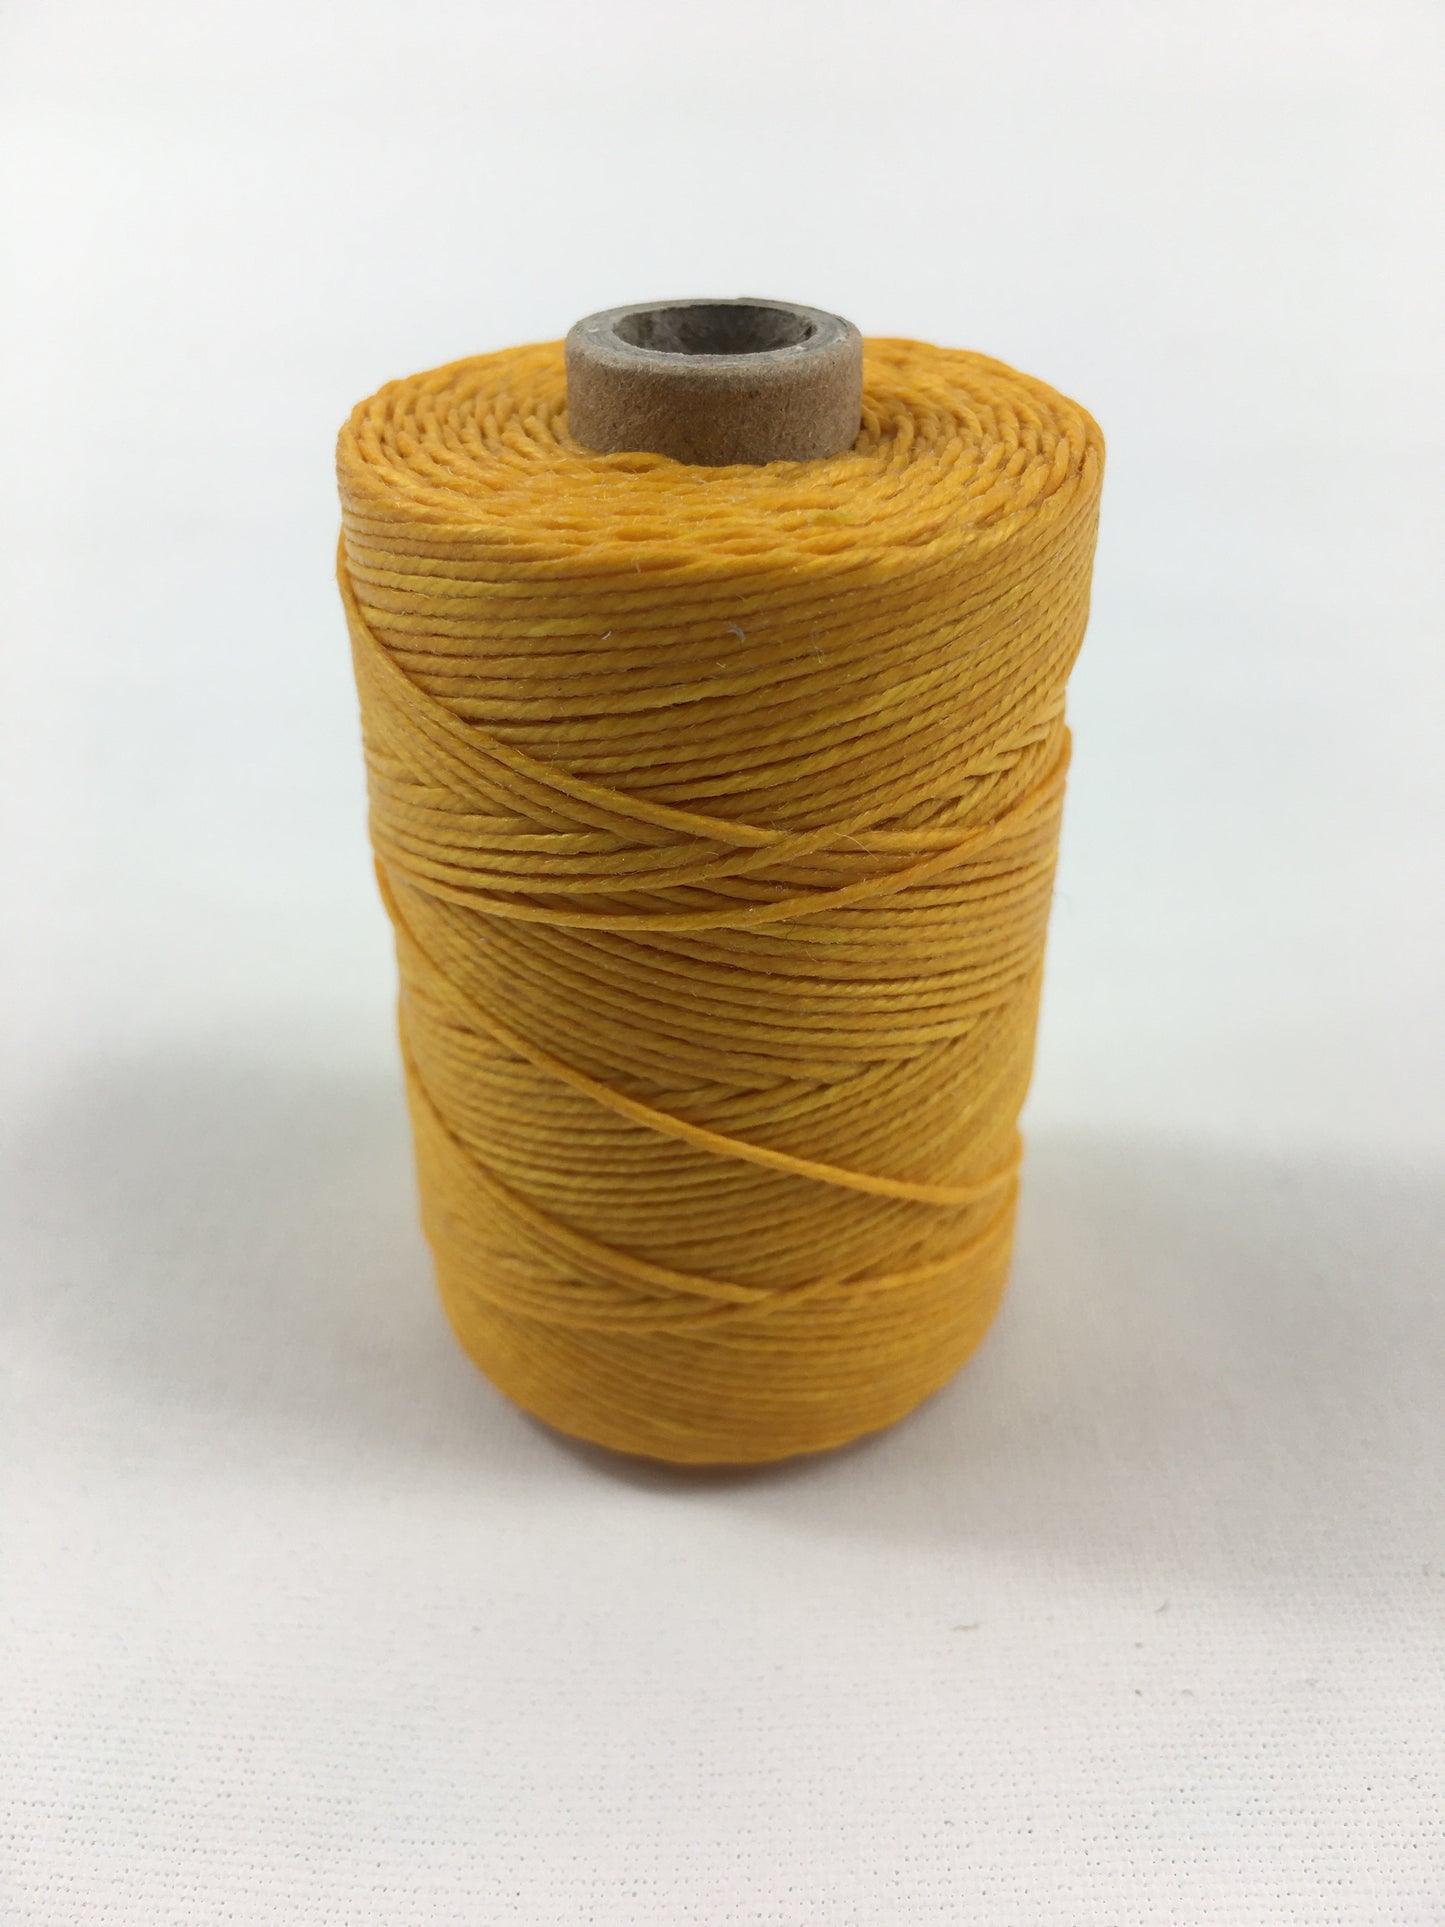 100% Pure Linen Thread- Per spool 50g- Waxed- 18/4 No.18 Cord 4- Approx 1mm thick- TBBNL6